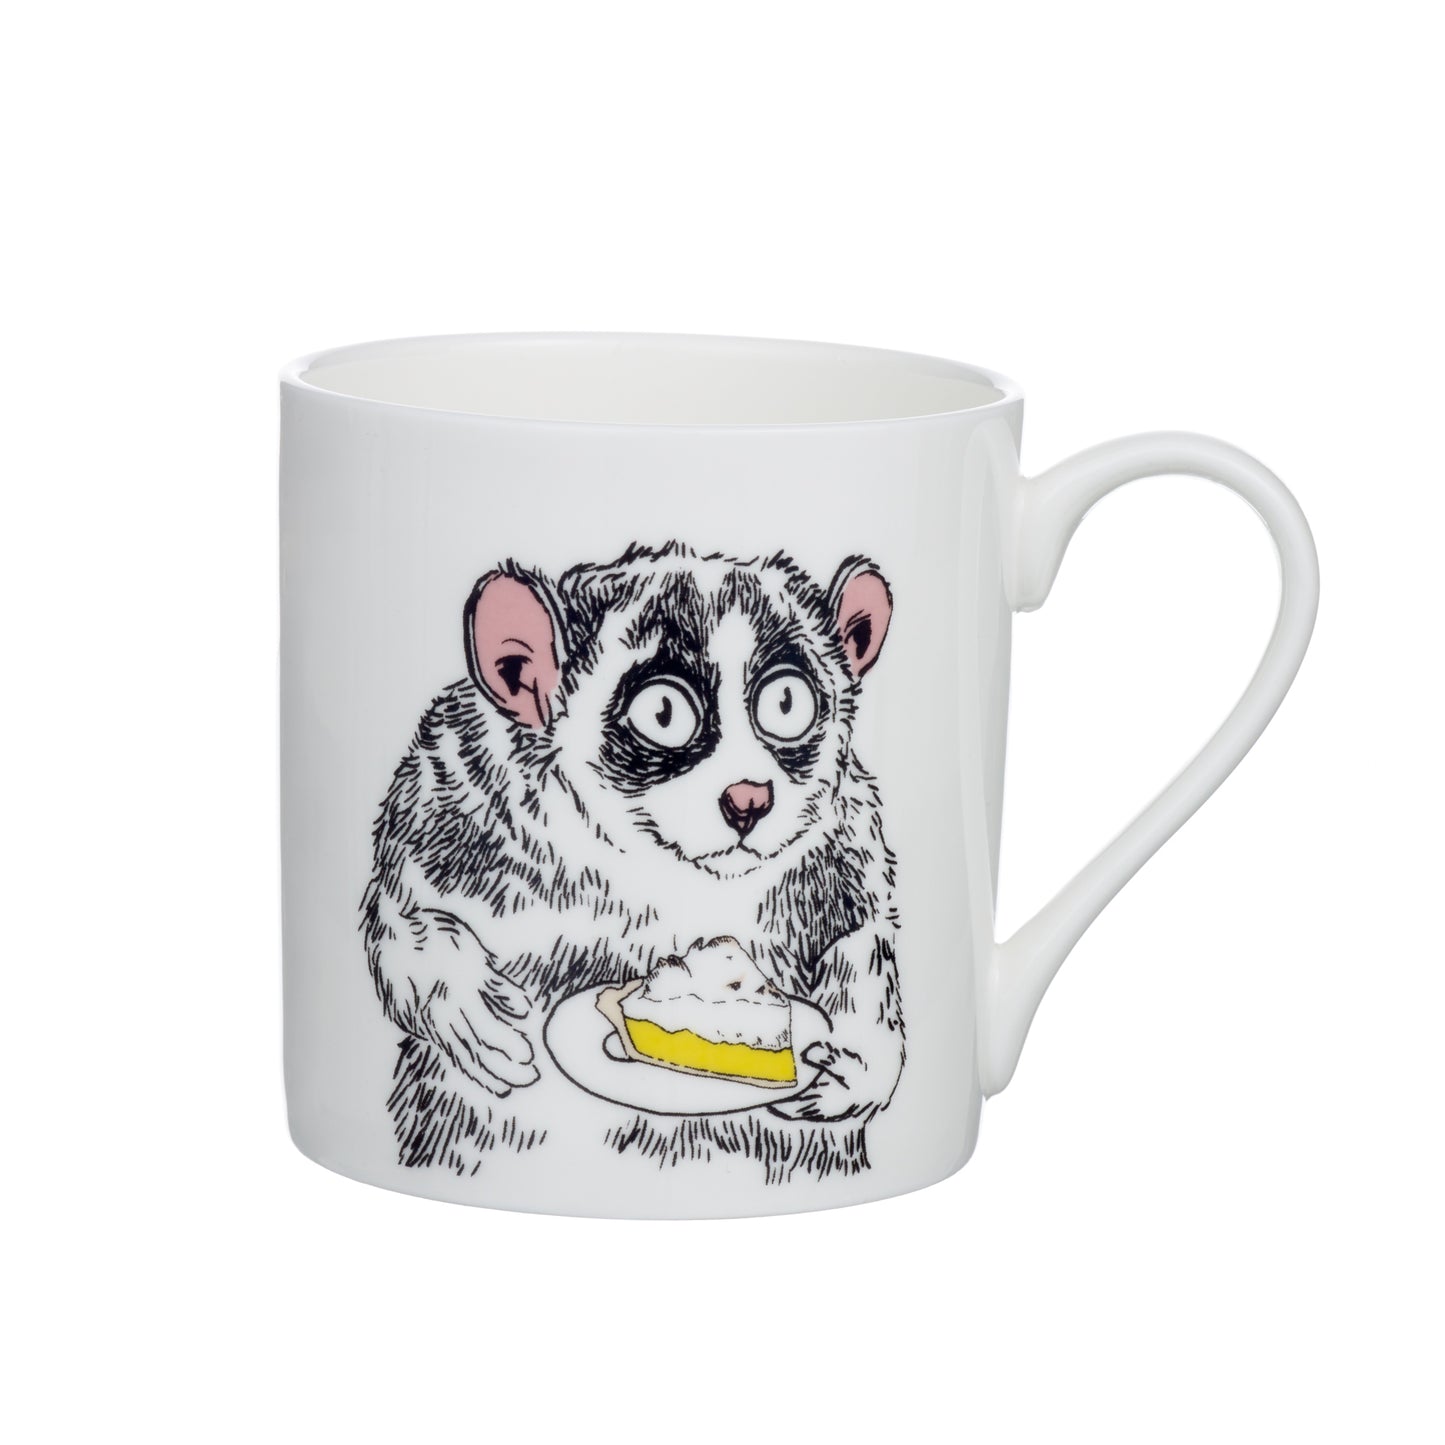 L - Alphabet of Snacking Animals Mug